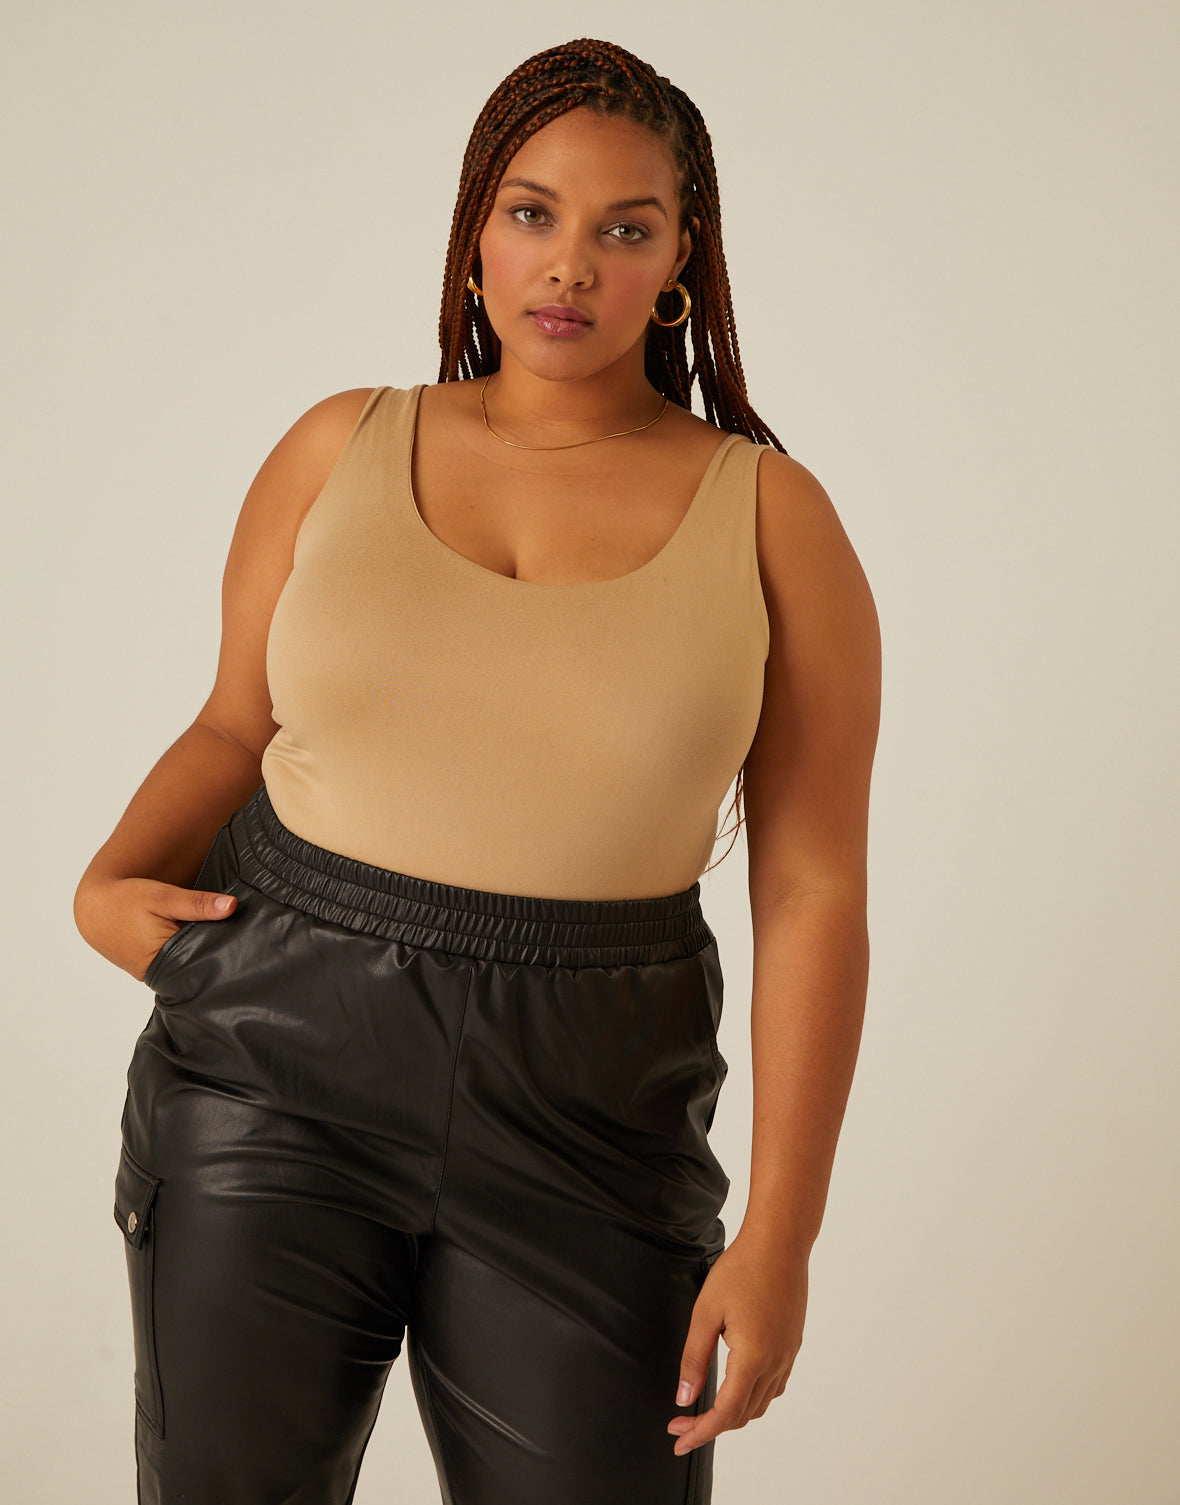 Plus Size Avery Sleeveless Bodysuit - plus size bodysuits and